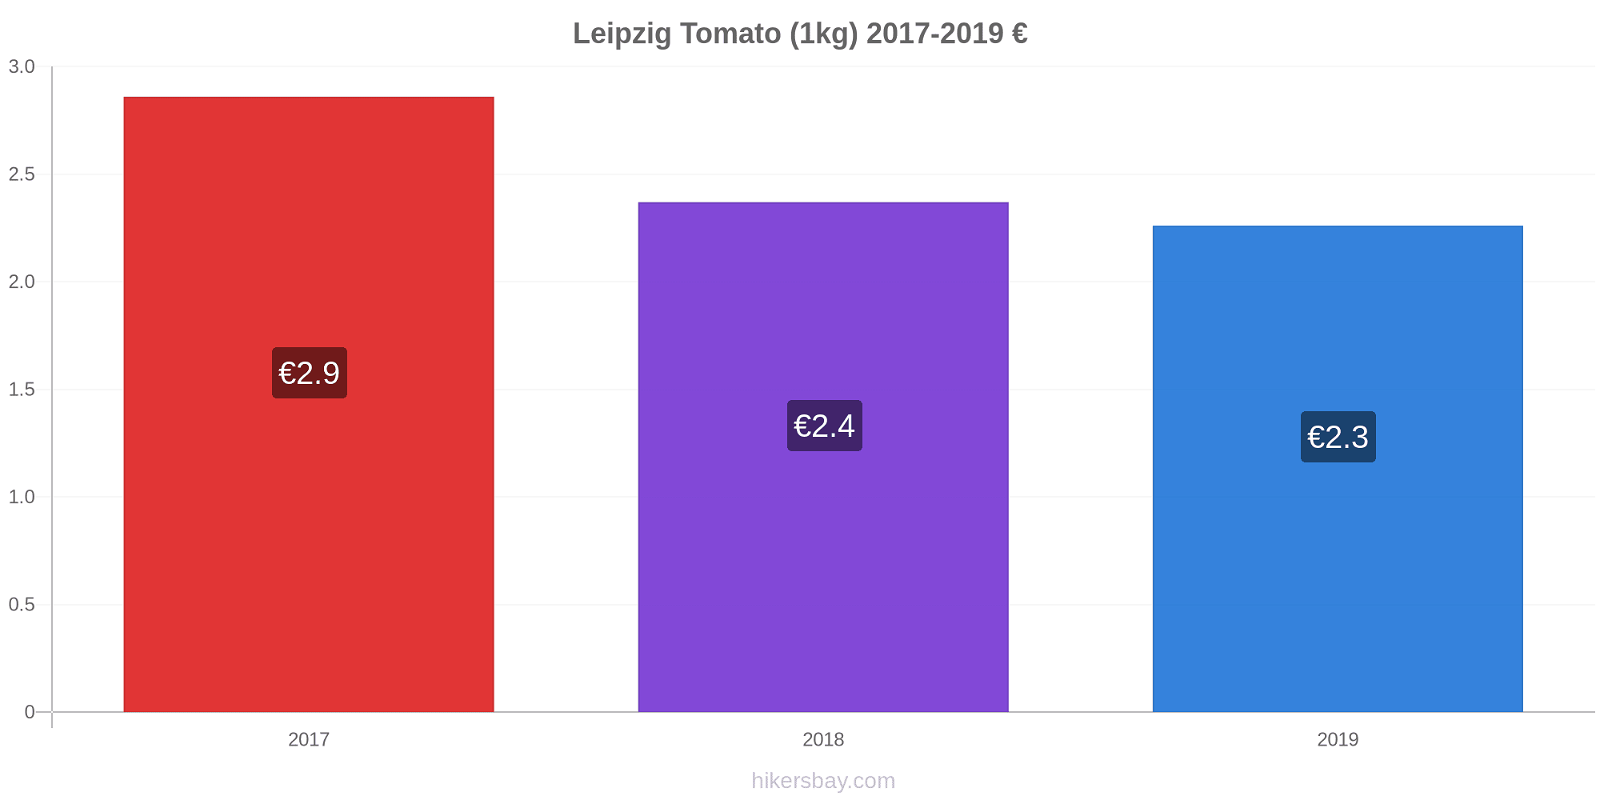 Leipzig price changes Tomato (1kg) hikersbay.com